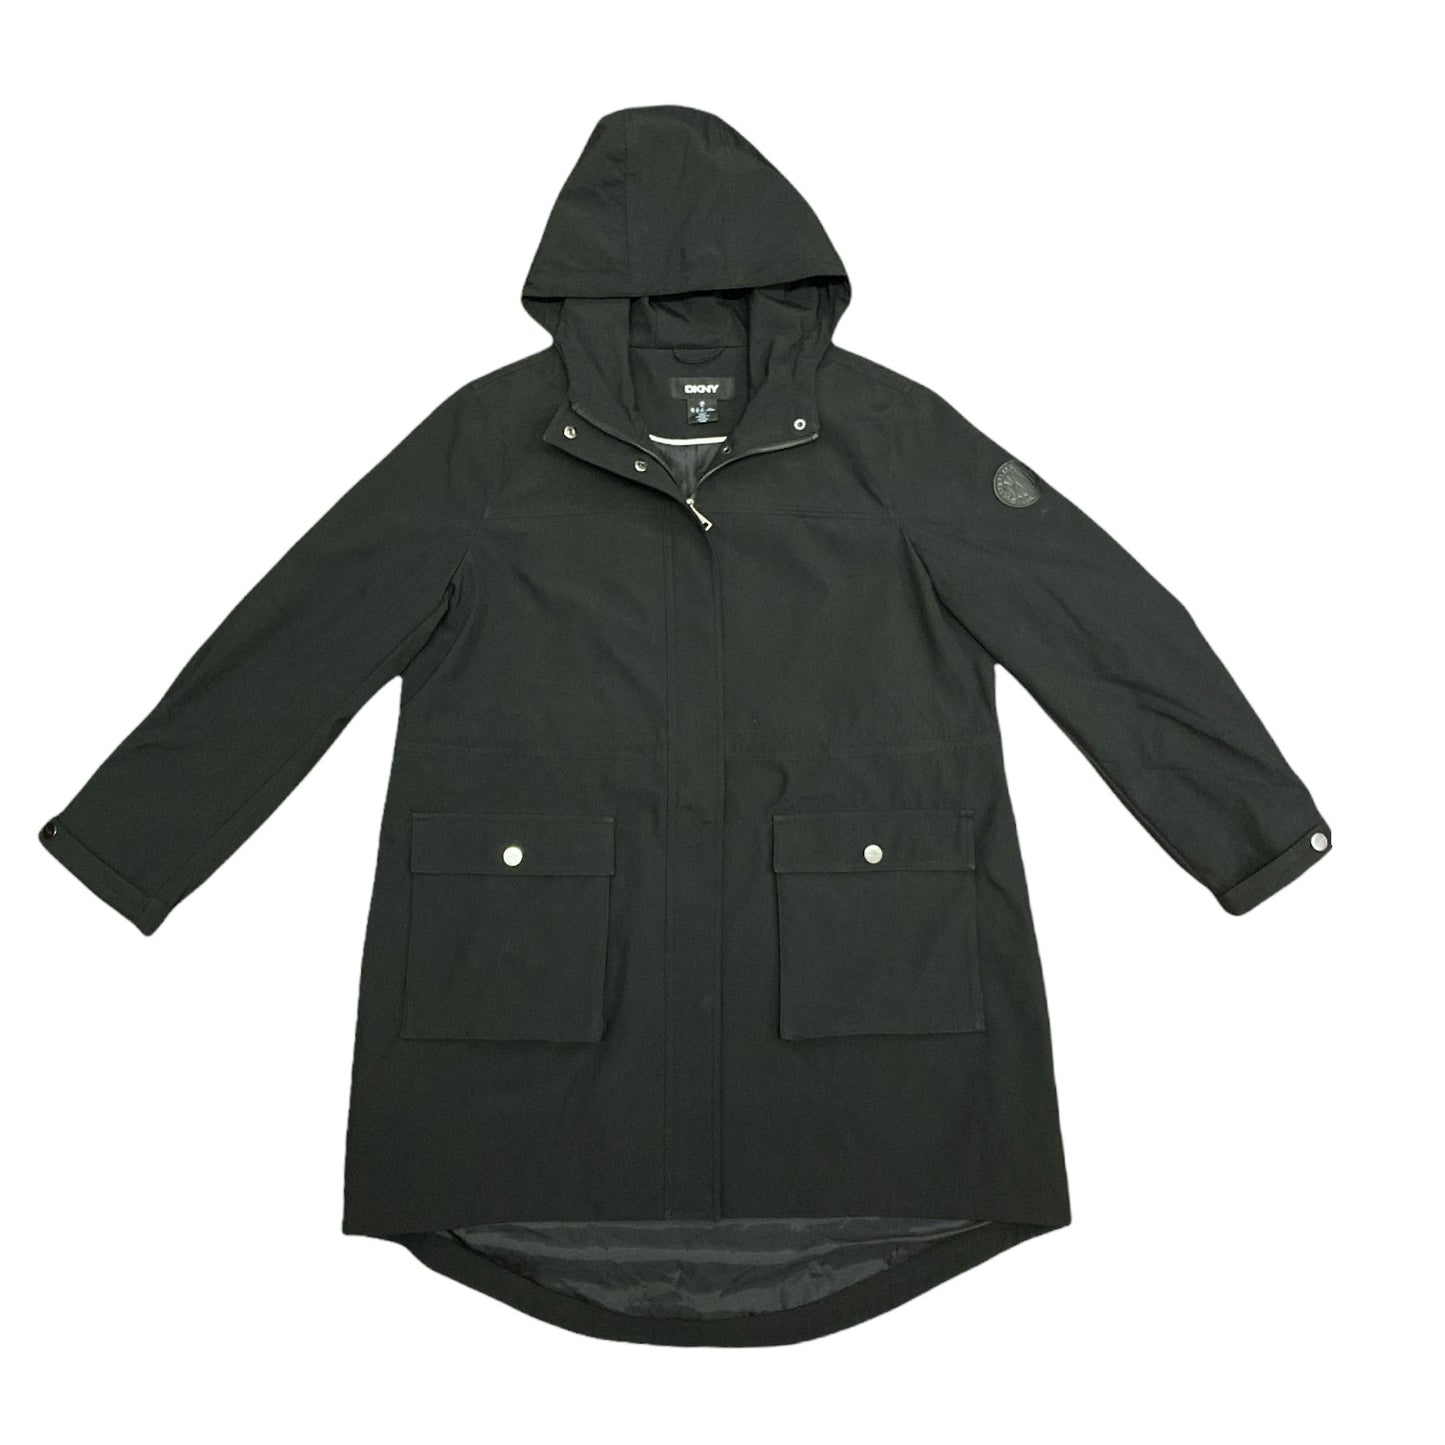 DKNY Women's Water Resistant Hooded Long Line Parka Jacket, Adjustable Waist